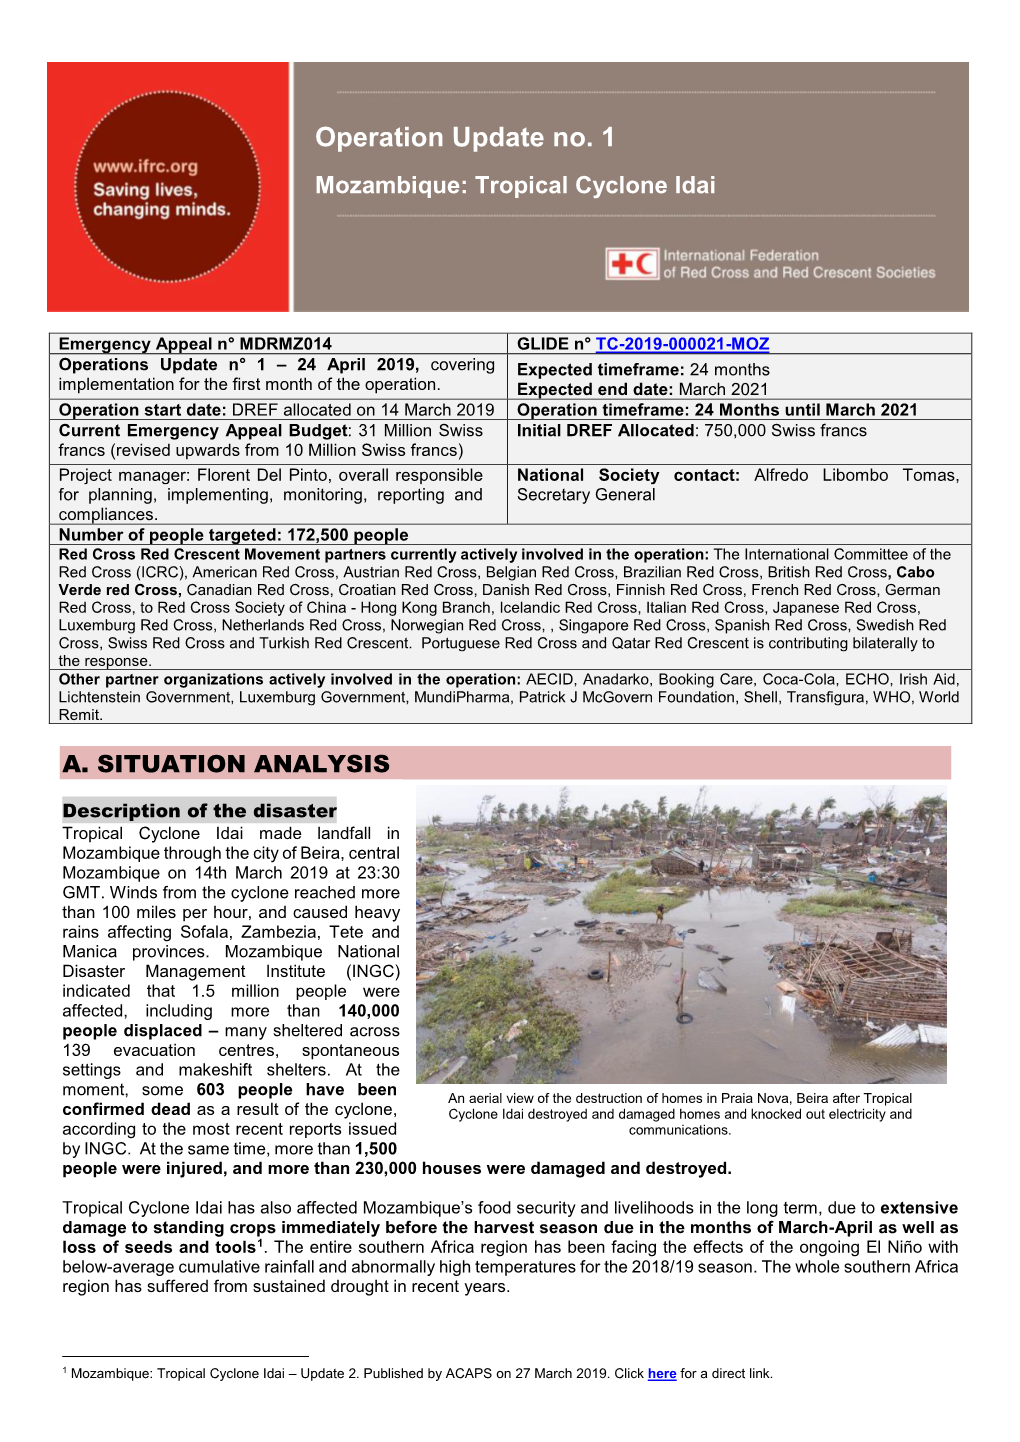 Operation Update No. 1 Mozambique: Tropical Cyclone Idai